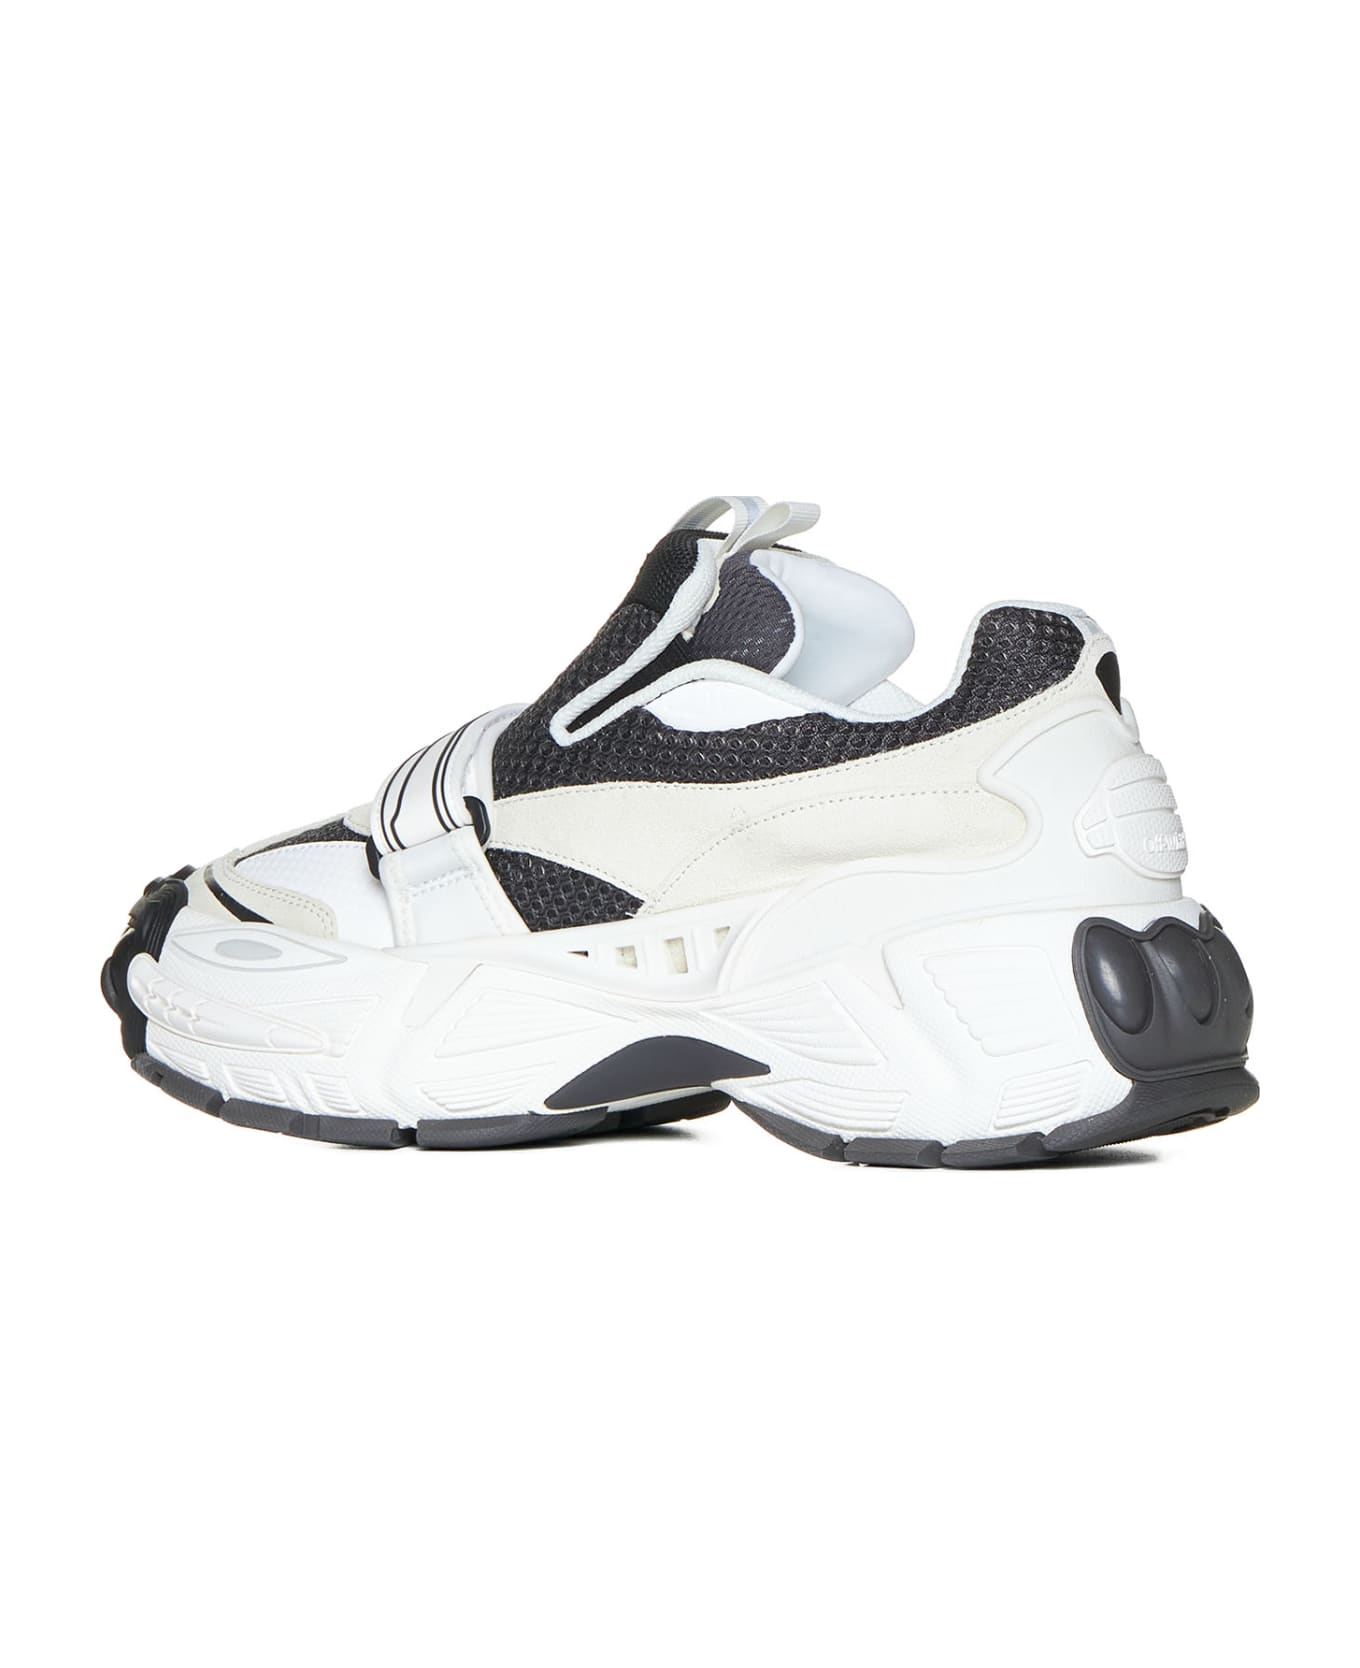 Off-White Glove Mix Materials Slip On Sneakers - White BLACK